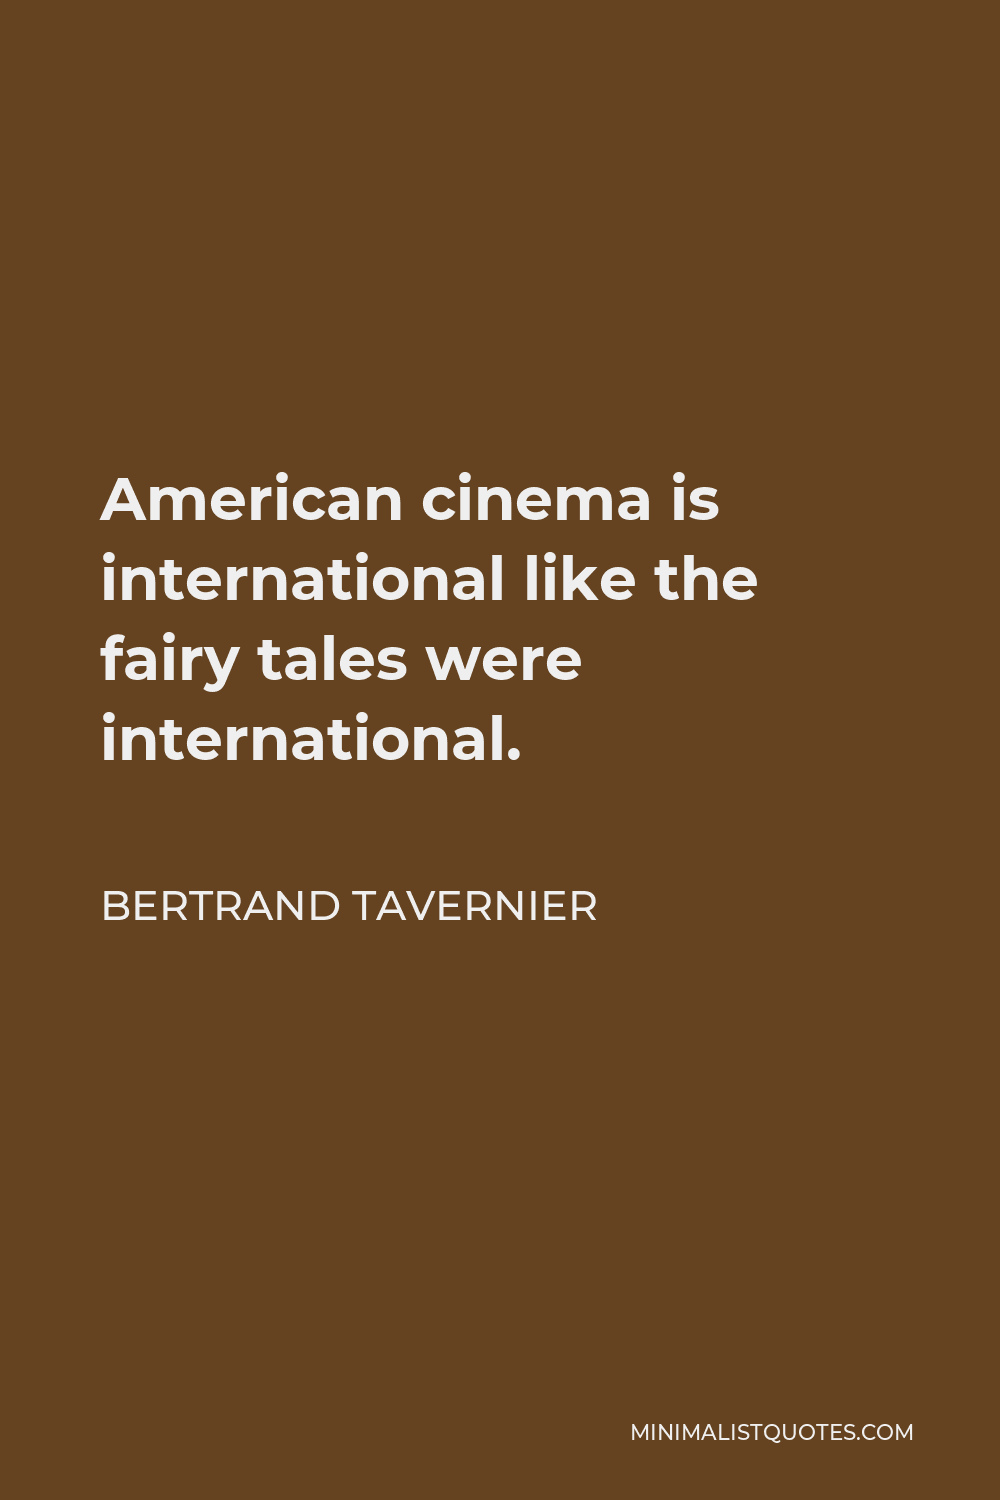 Bertrand Tavernier Quote - American cinema is international like the fairy tales were international.